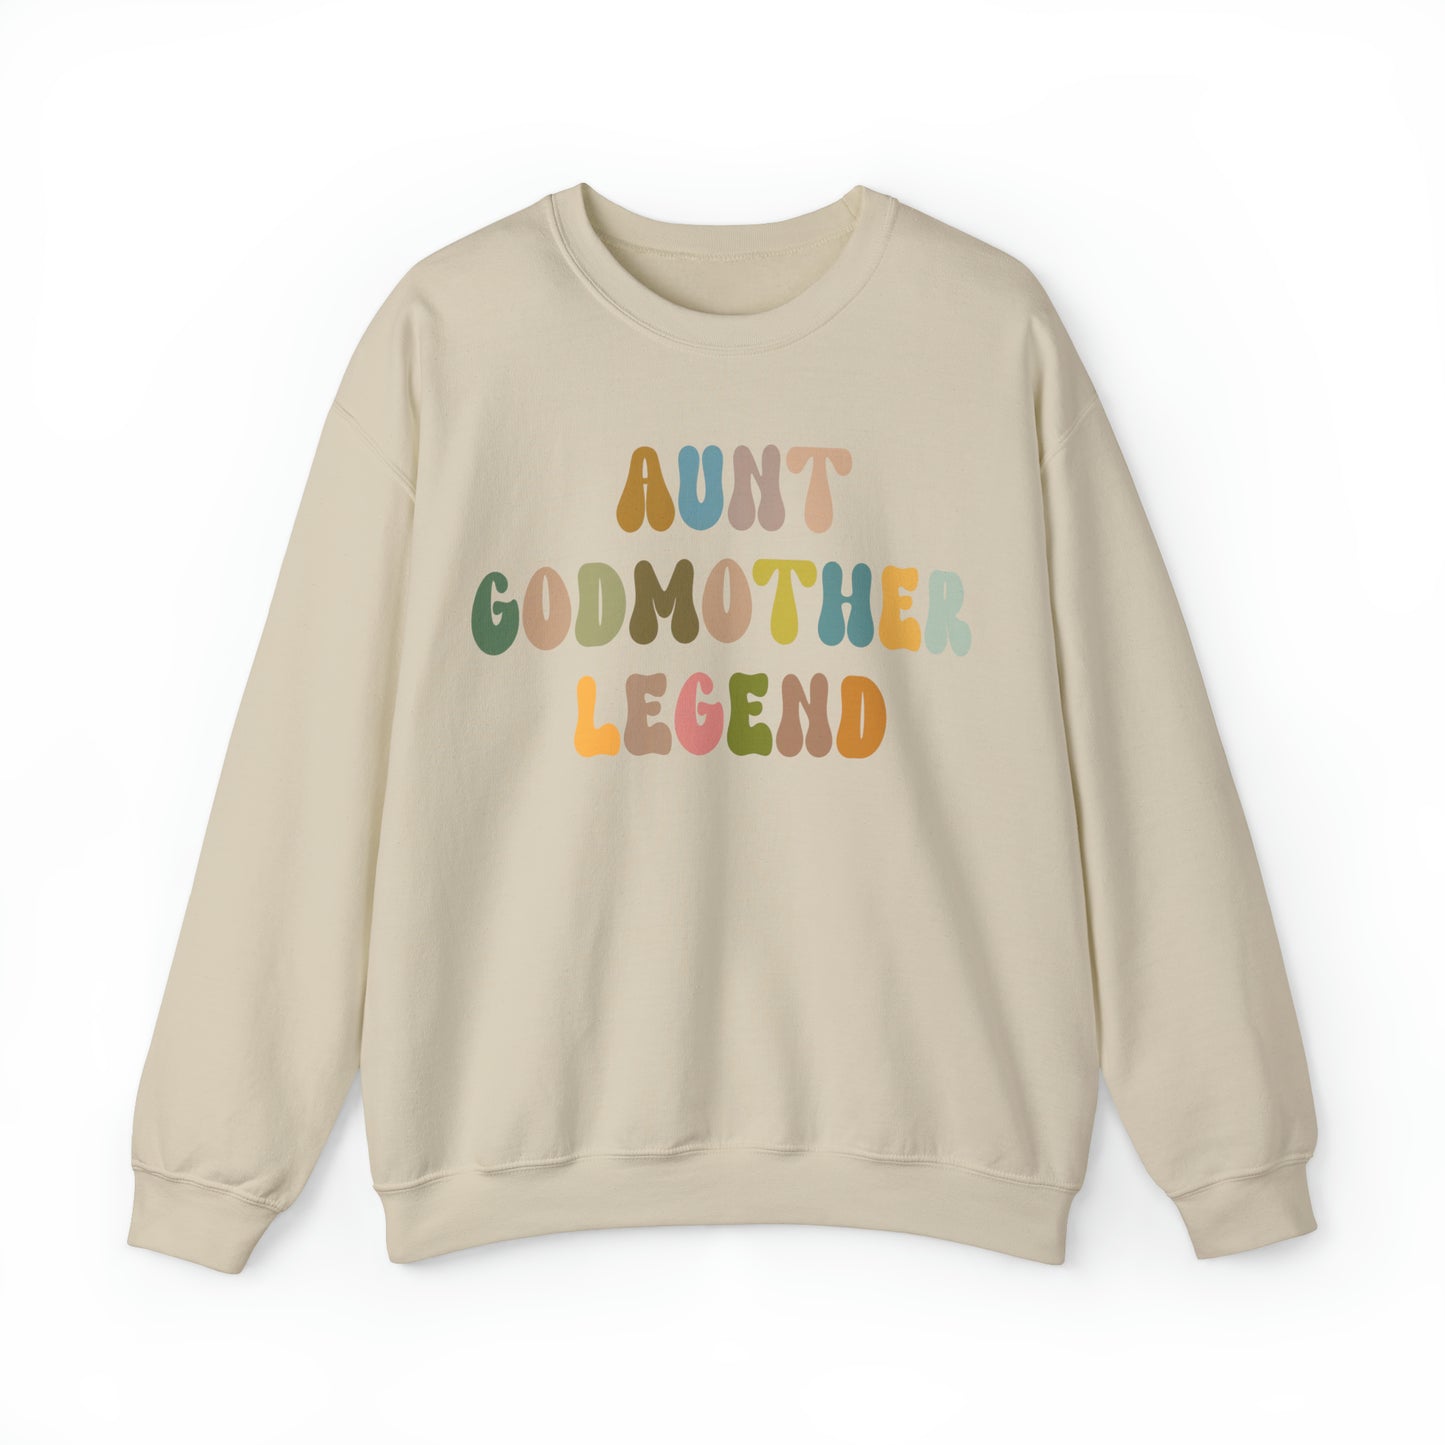 Aunt Godmother Legend Sweatshirt, Cute Godmother Gift from Goddaughter, Godmother Proposal , Retro Godmother Gift for Baptism, S1033